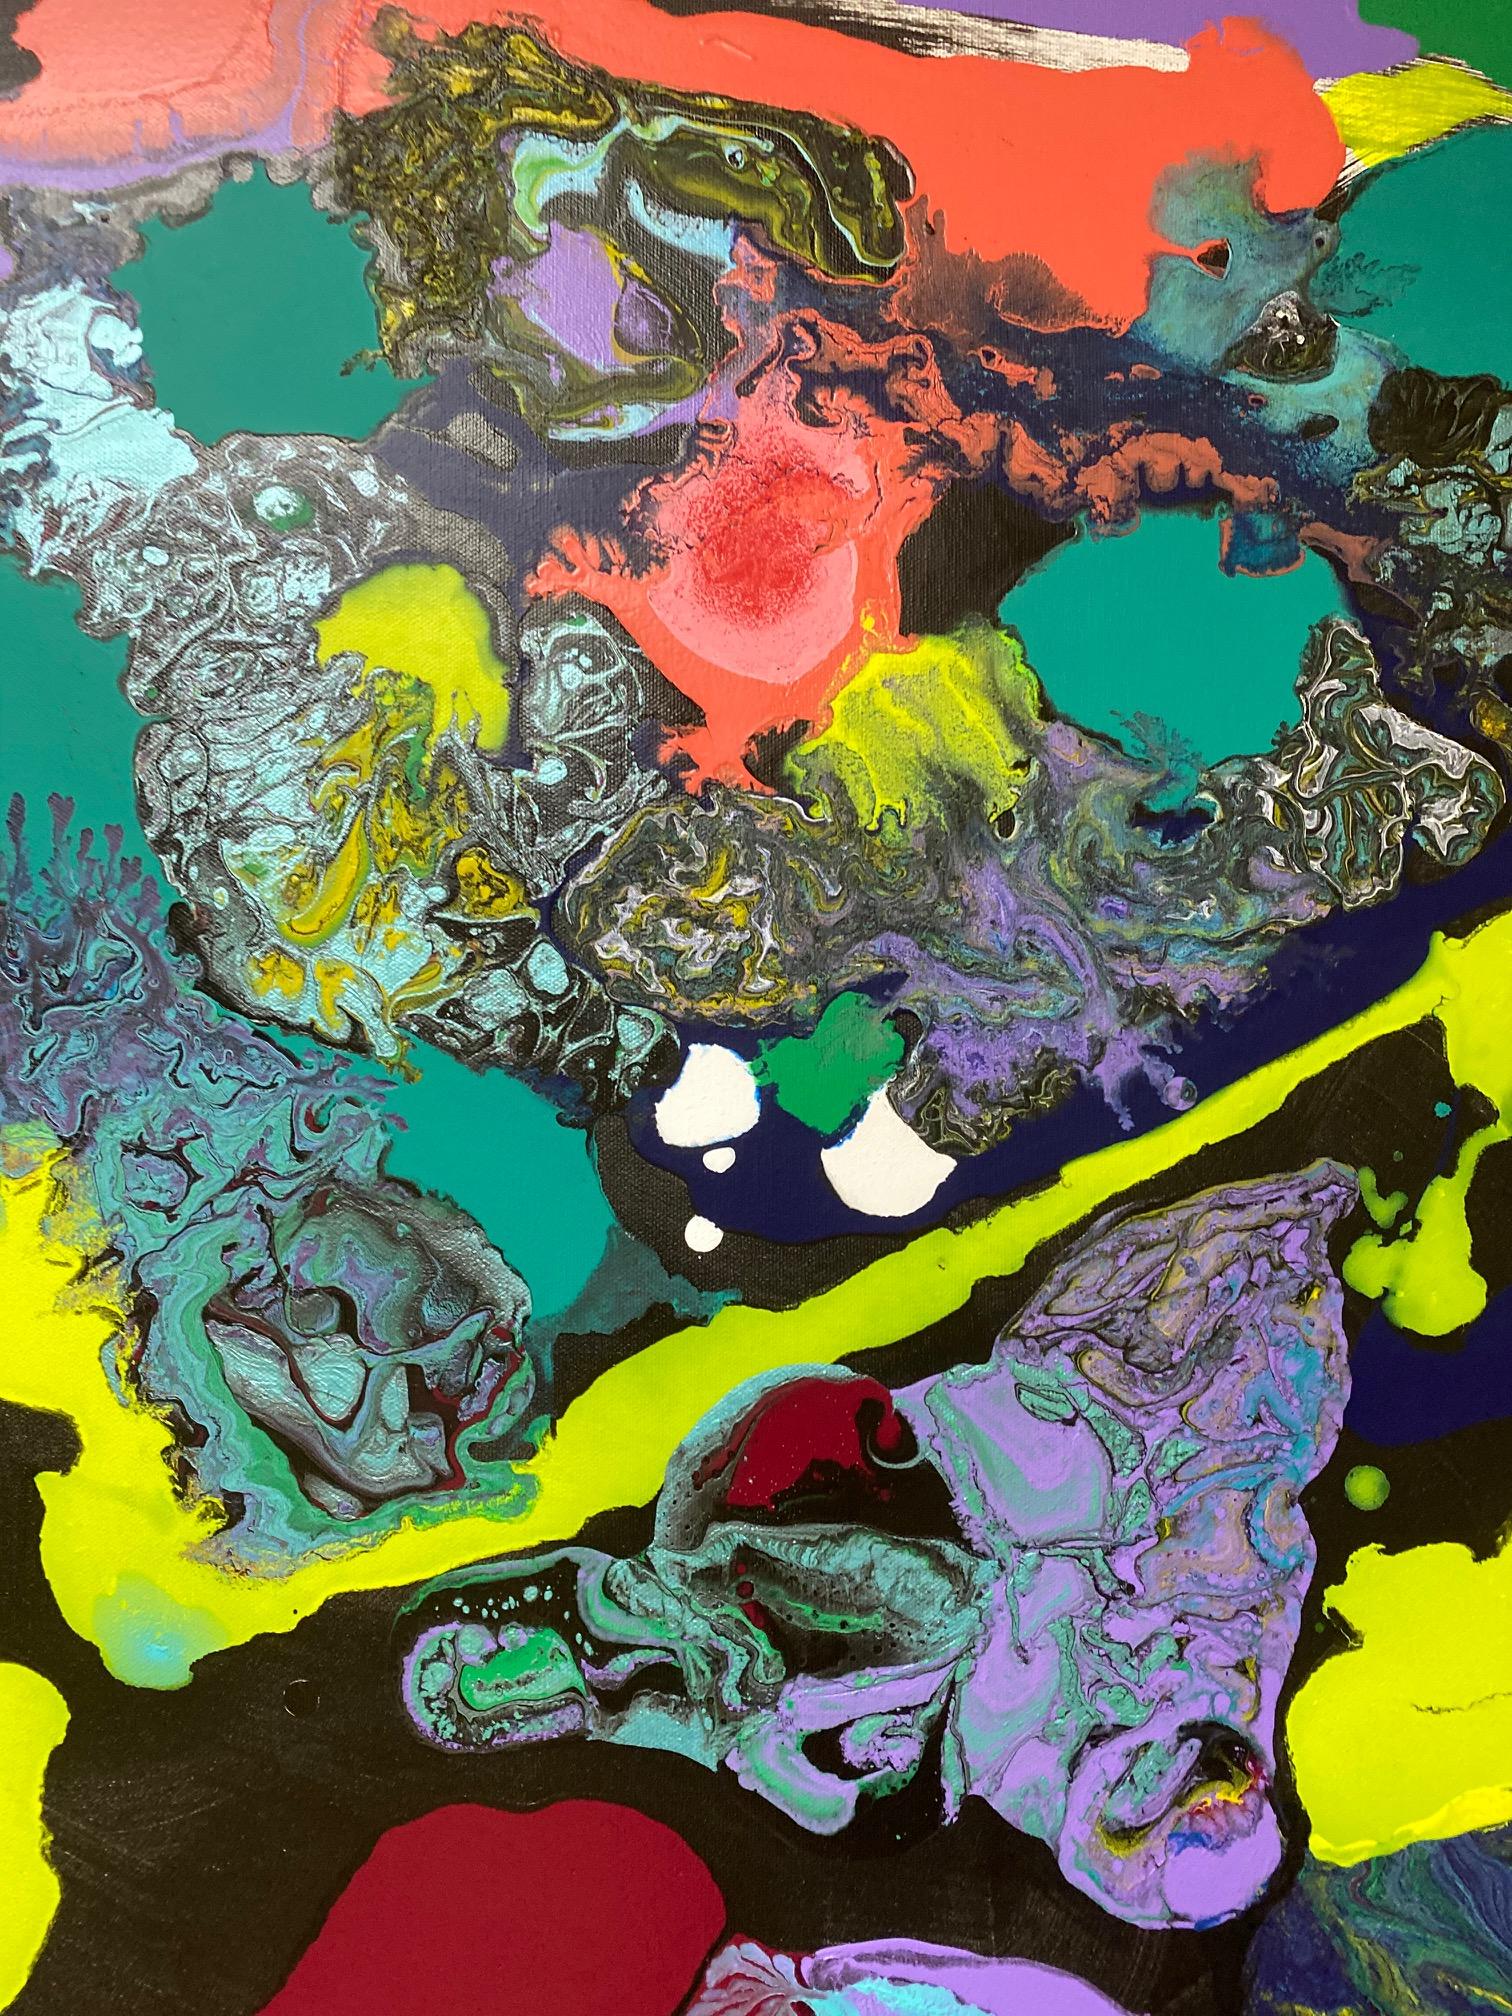 Awakening, original 36x36 abstract expressionist acrylic painting - Abstract Expressionist Painting by Carol Carpenter